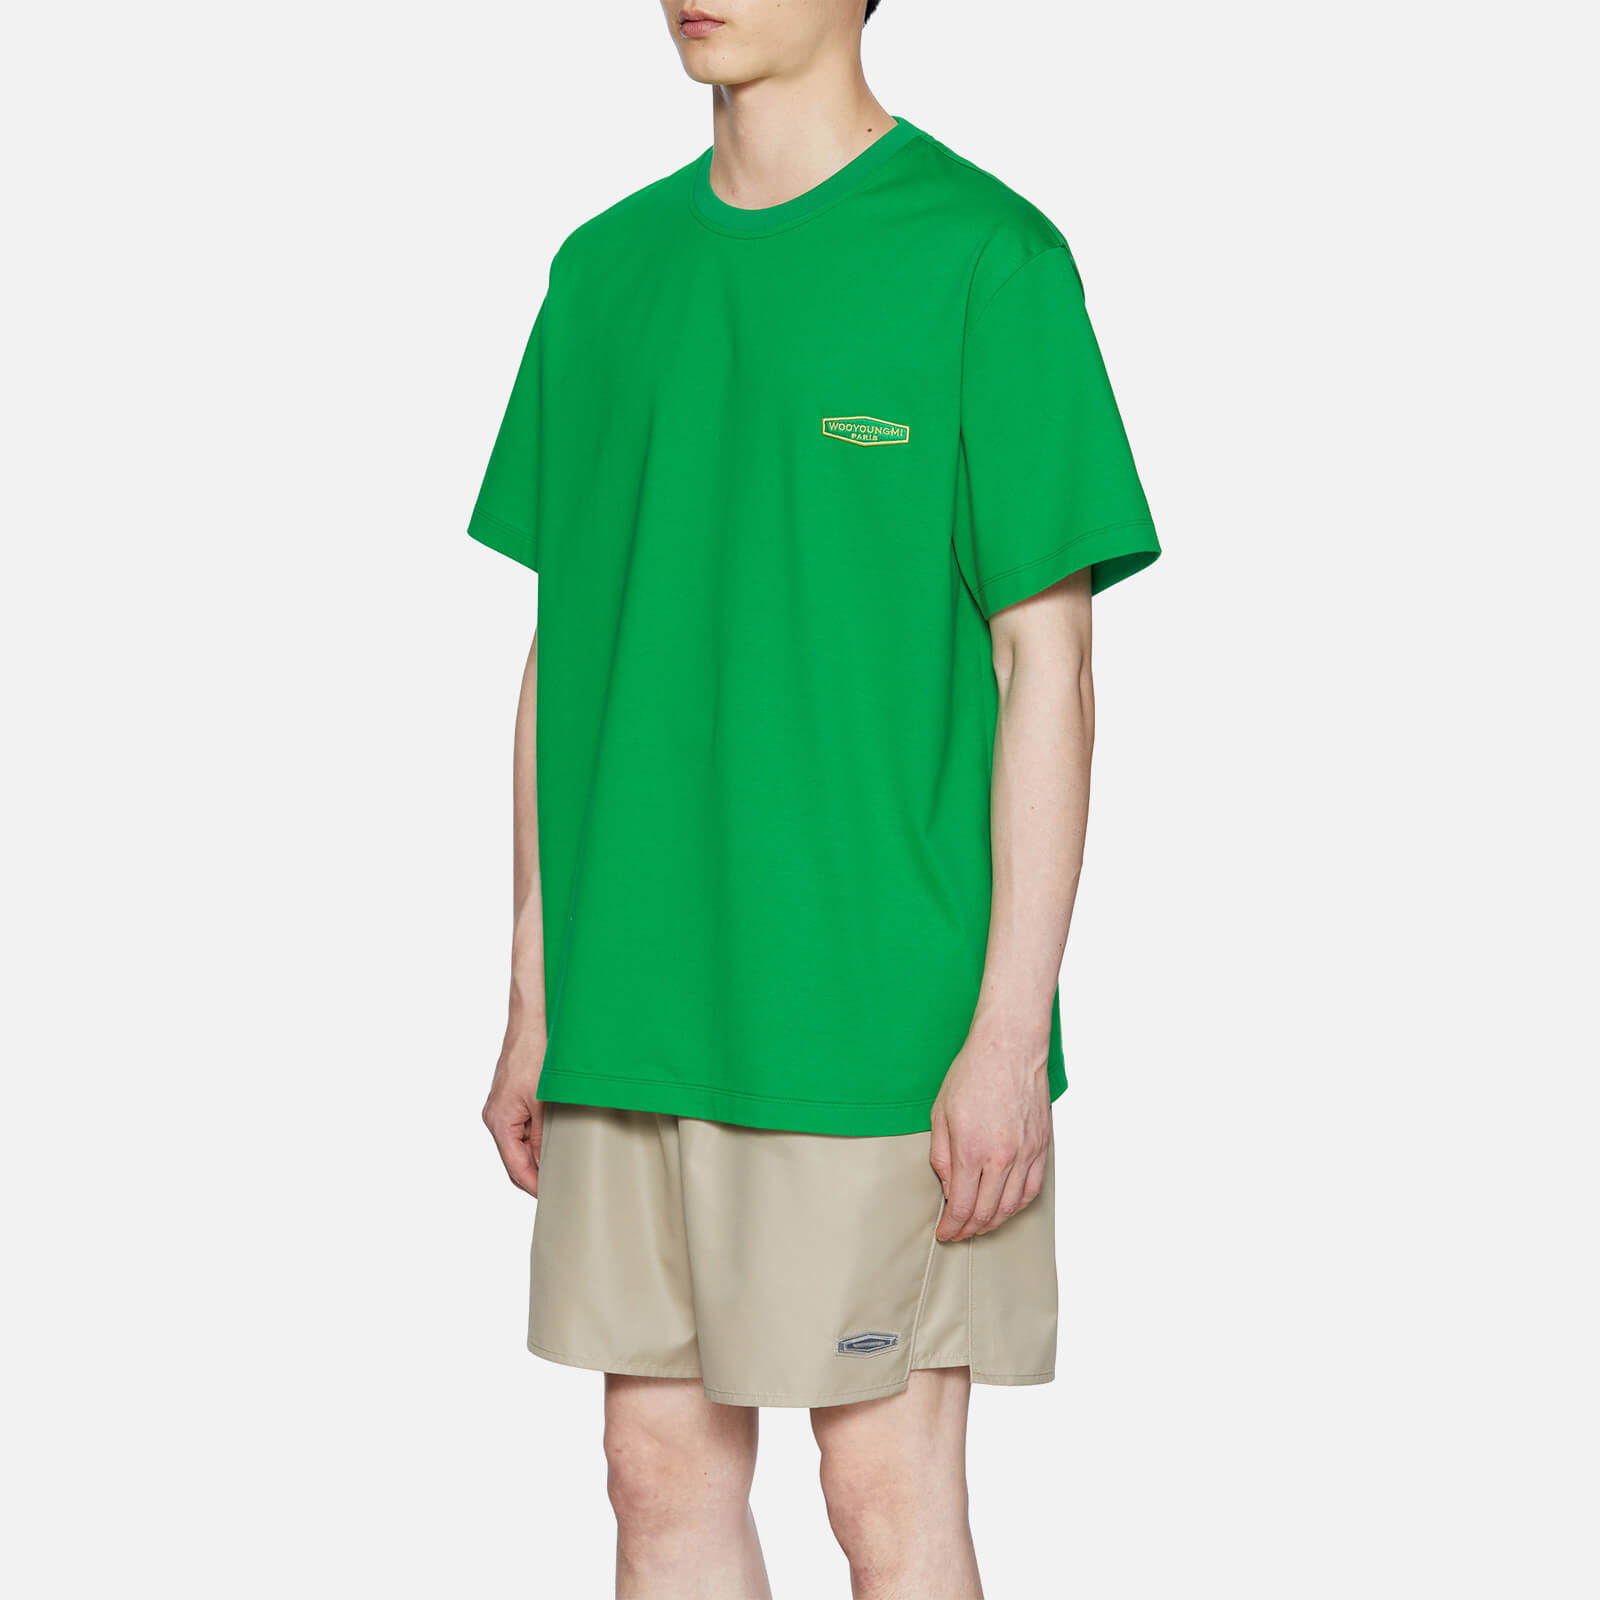 Wooyoungmi Men's Script Logo T-Shirt - Freshgreen - 46/S